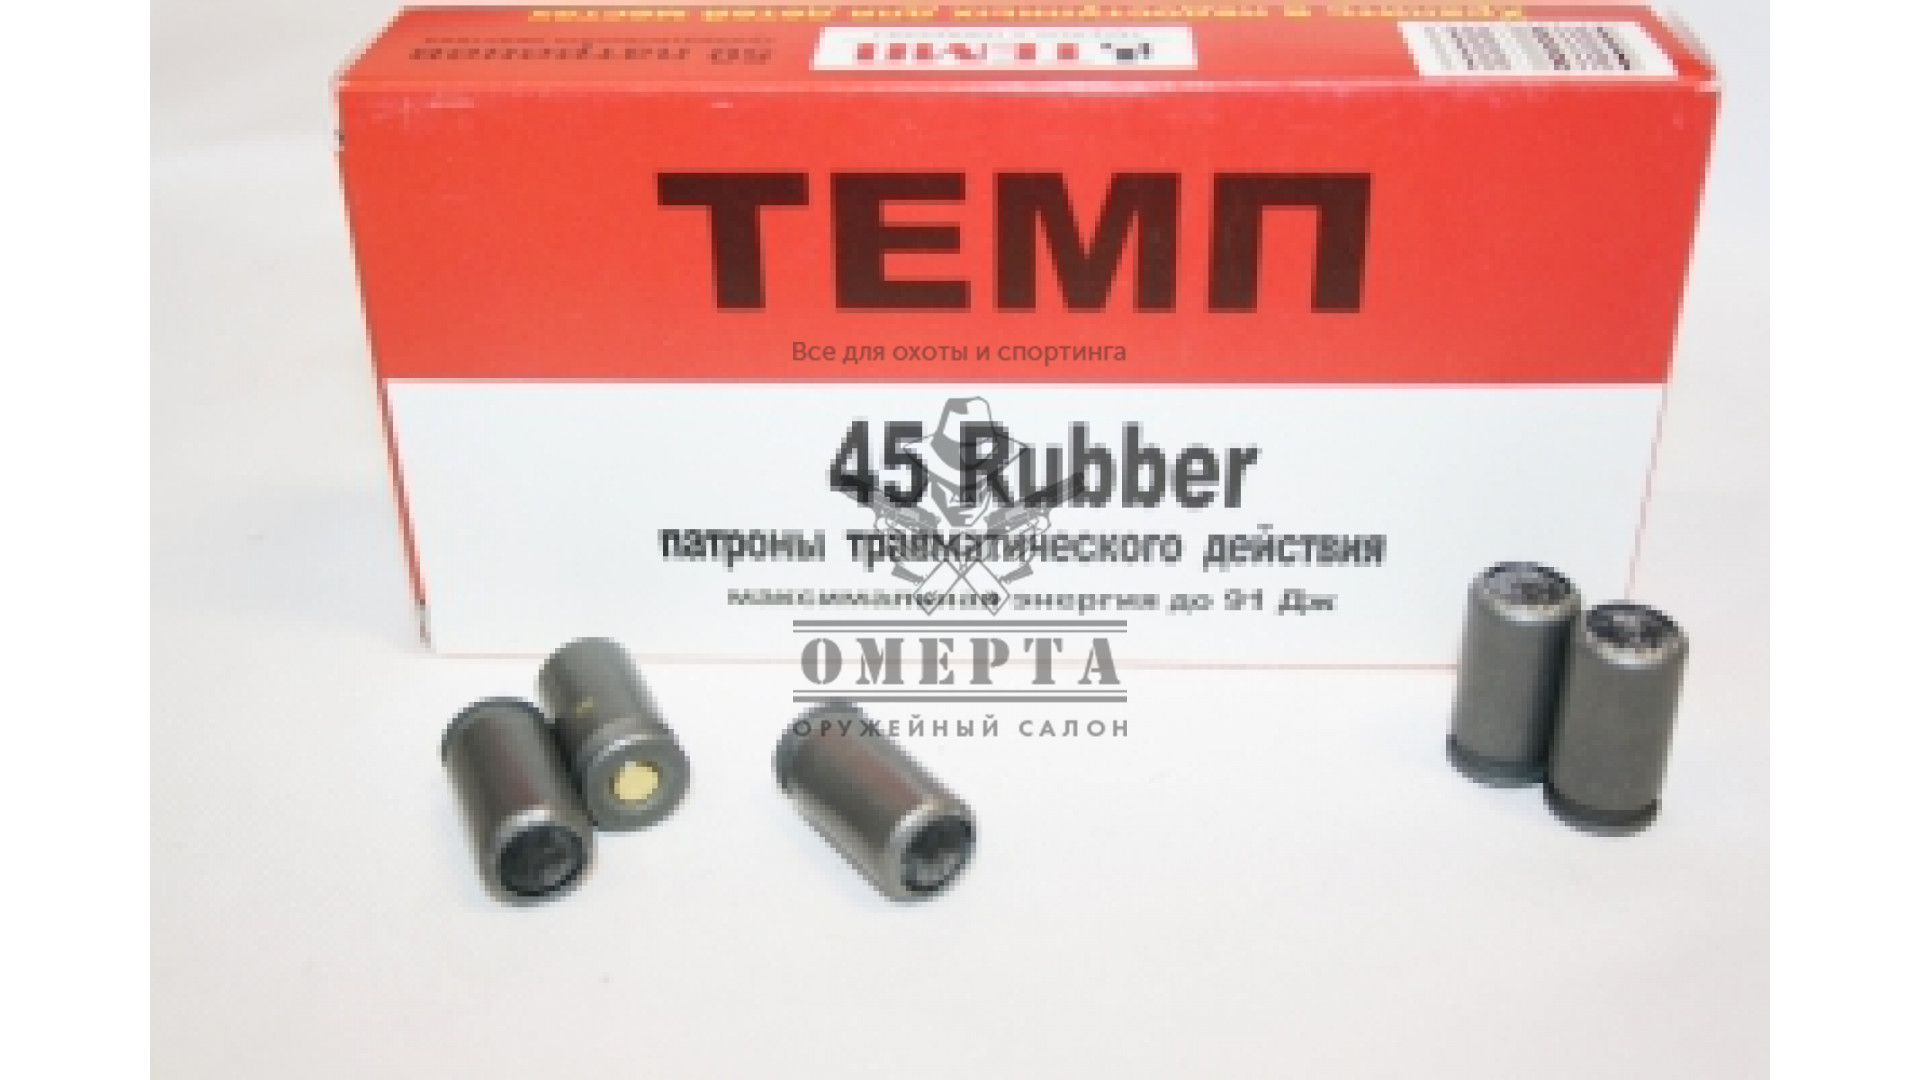 "ТЕМП" 45 Rubber 